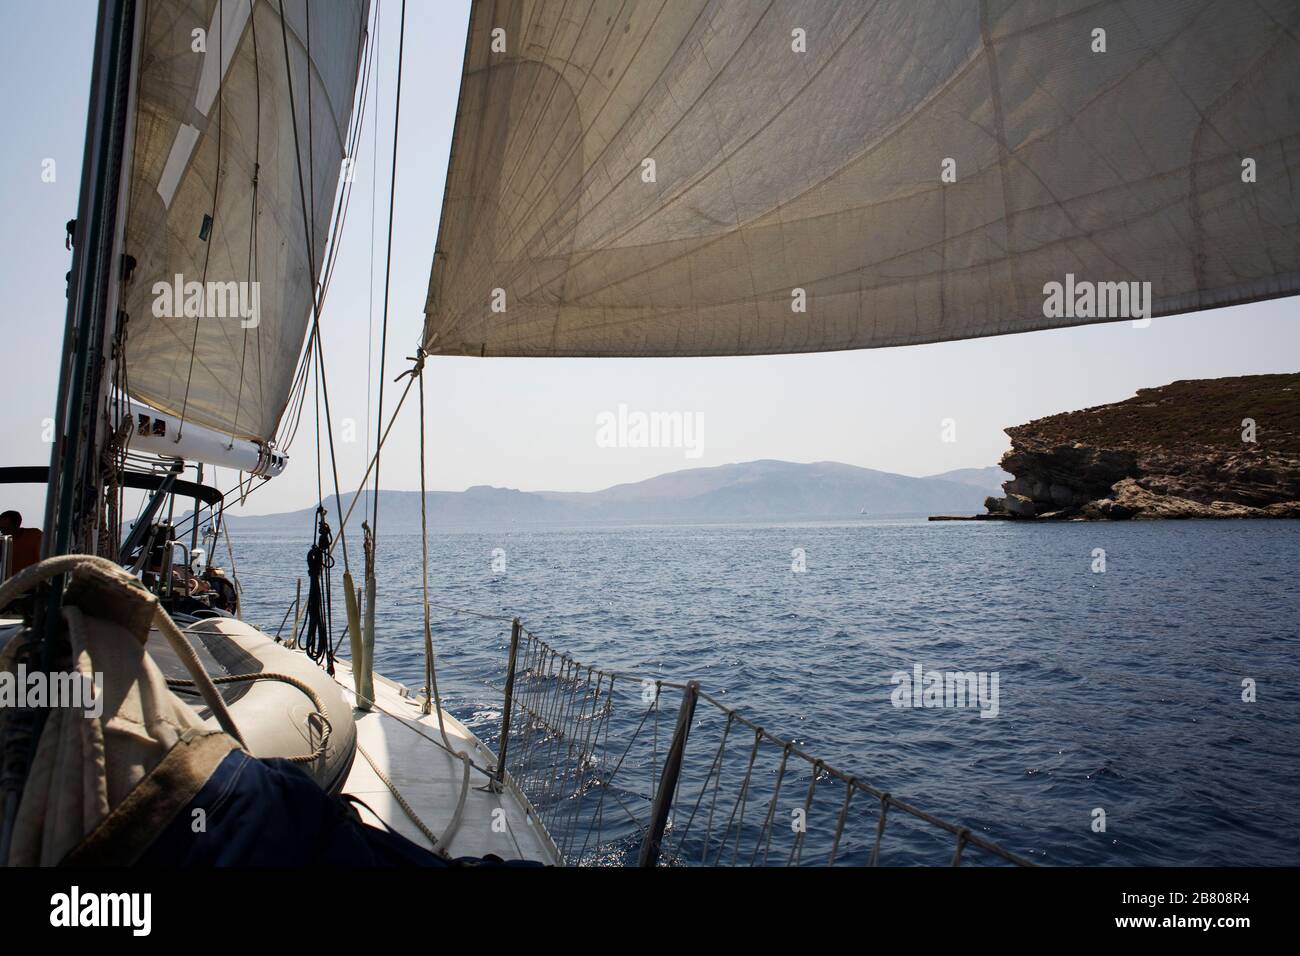 Egean islands and Peleponese peninsula. Egean Sea, Mediterranean. Greece (Hellas), Europe. Stock Photo